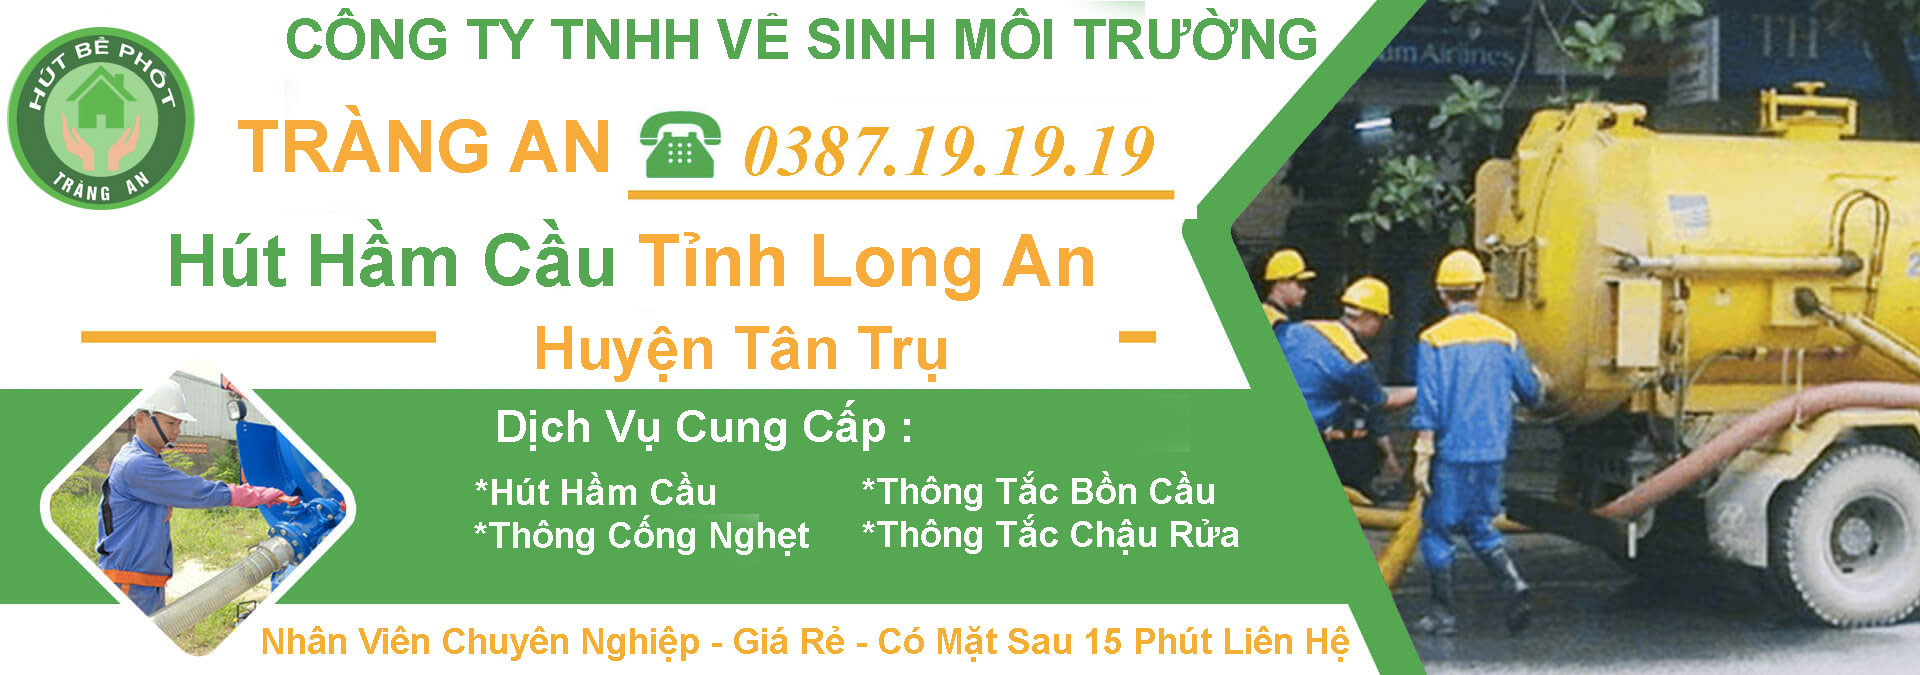 Hut Ham Cau Tinh Long An Tan Tru